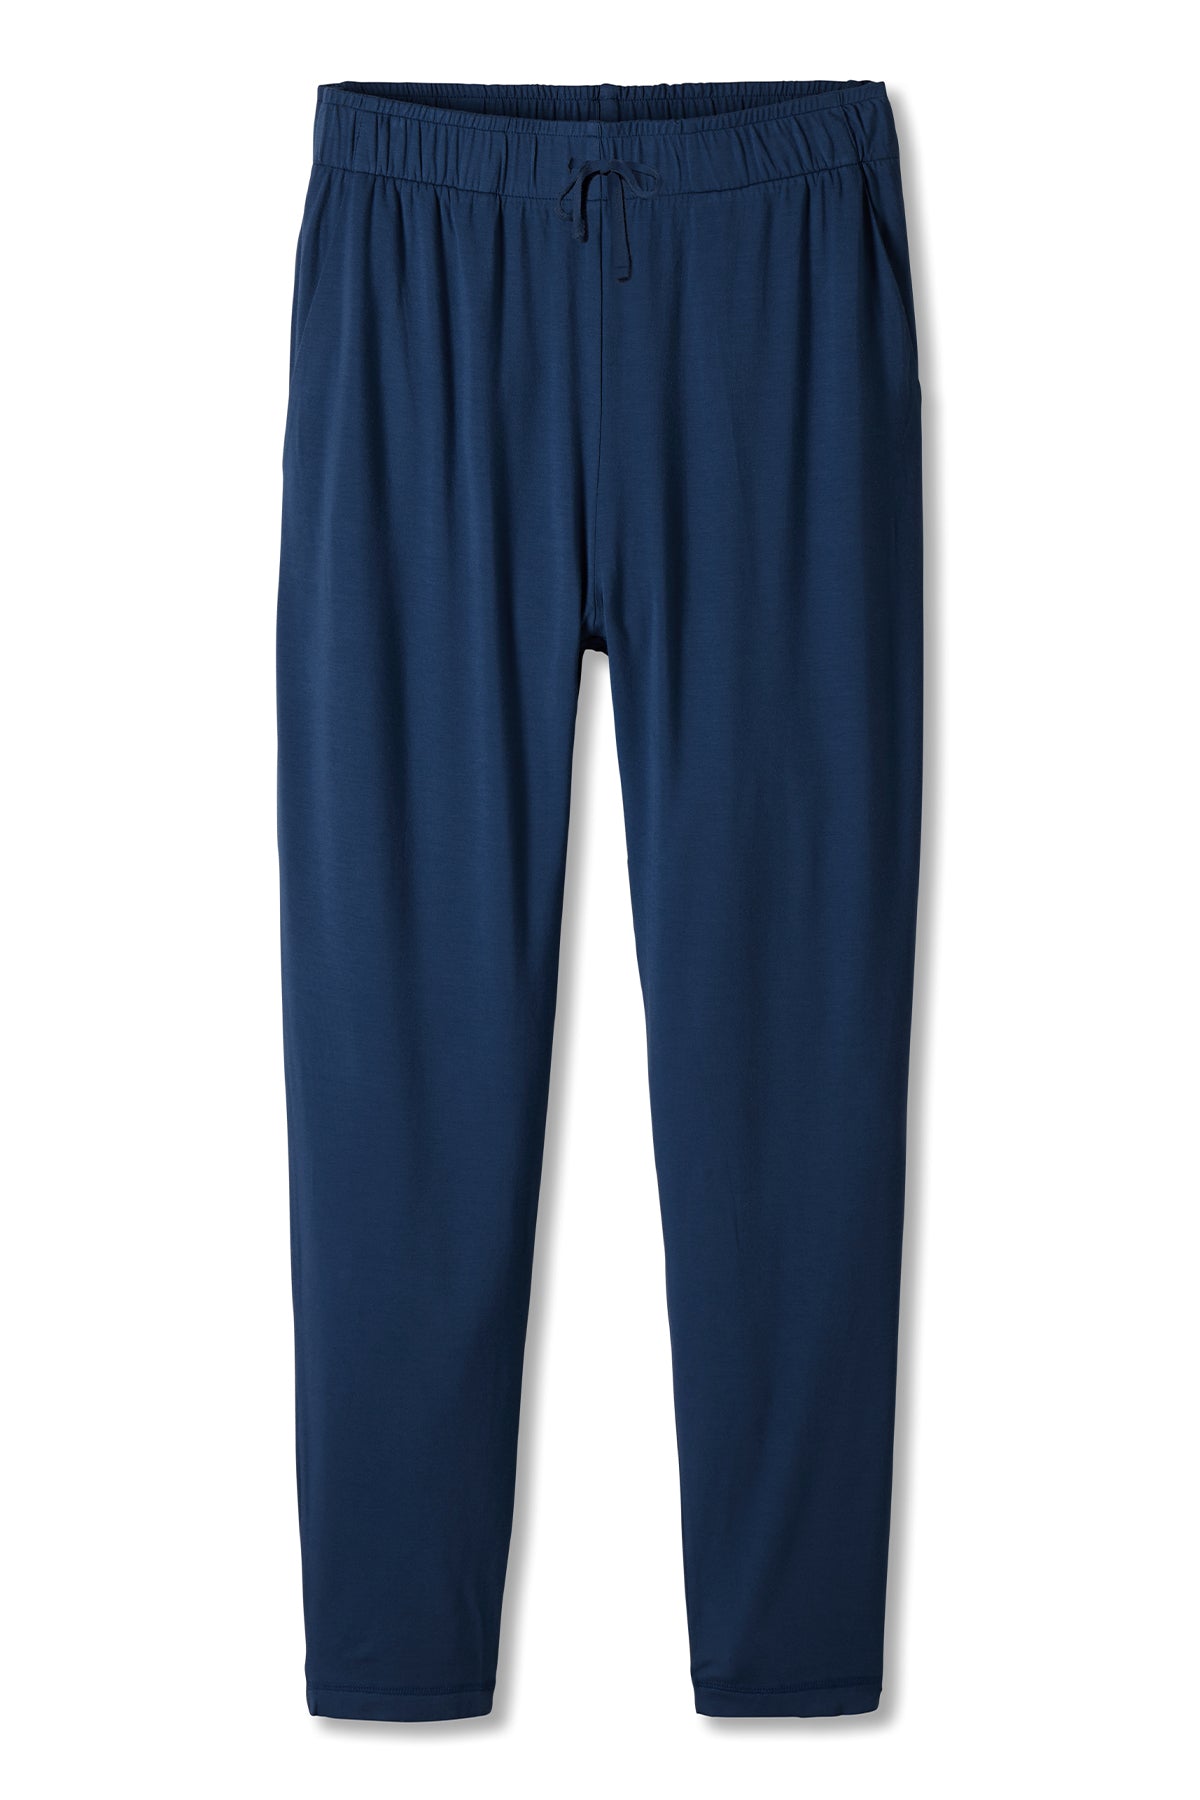 Nautica Men's Soft Knit Sleep Lounge-Pant, Grey Heather, Small at Amazon  Men's Clothing store